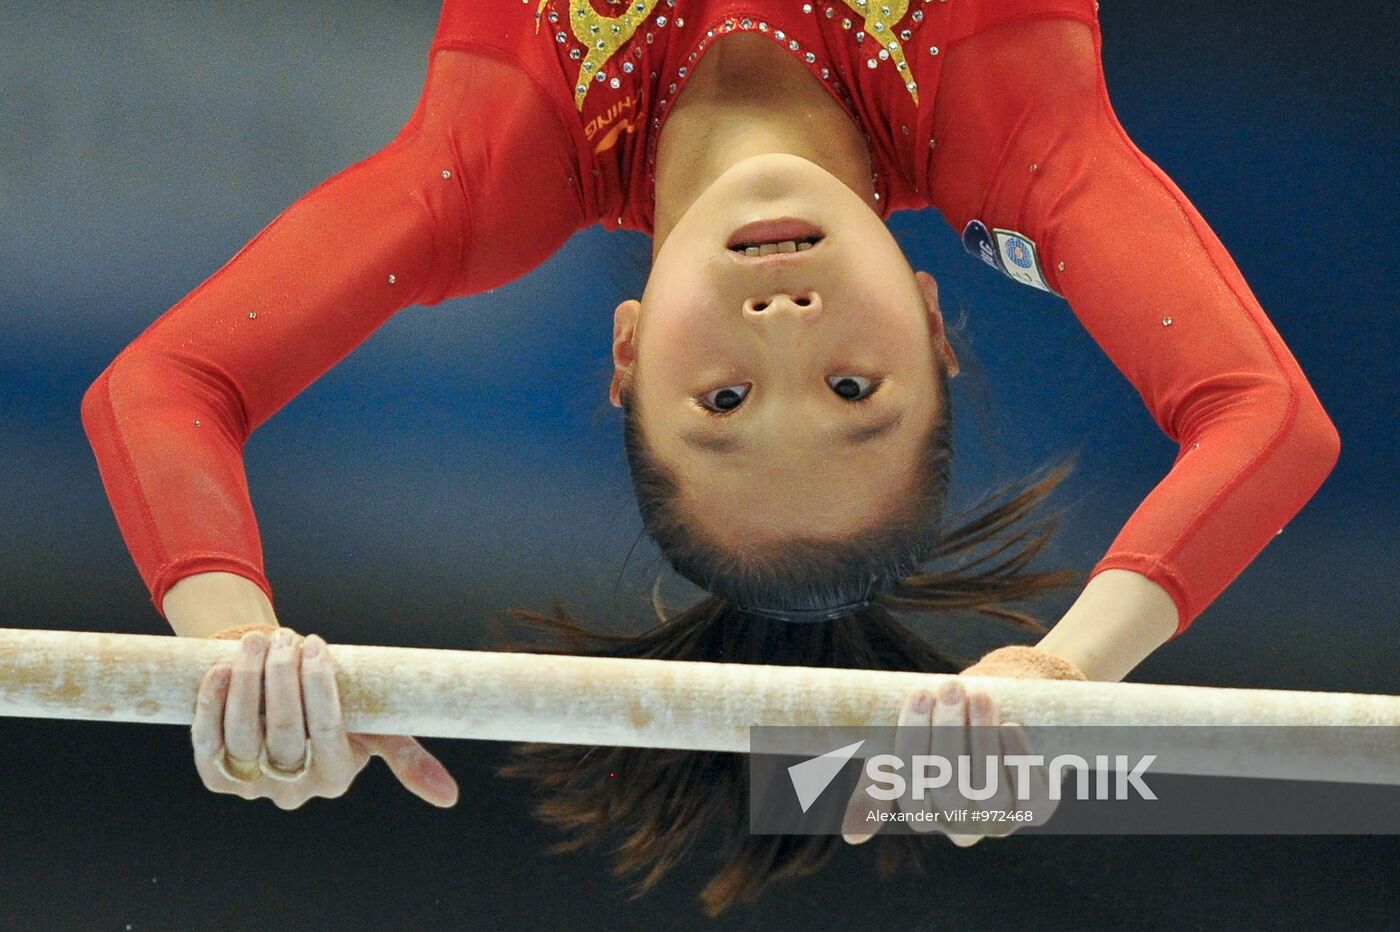 2011 World Artistic Gymnastics Championships. Day 7